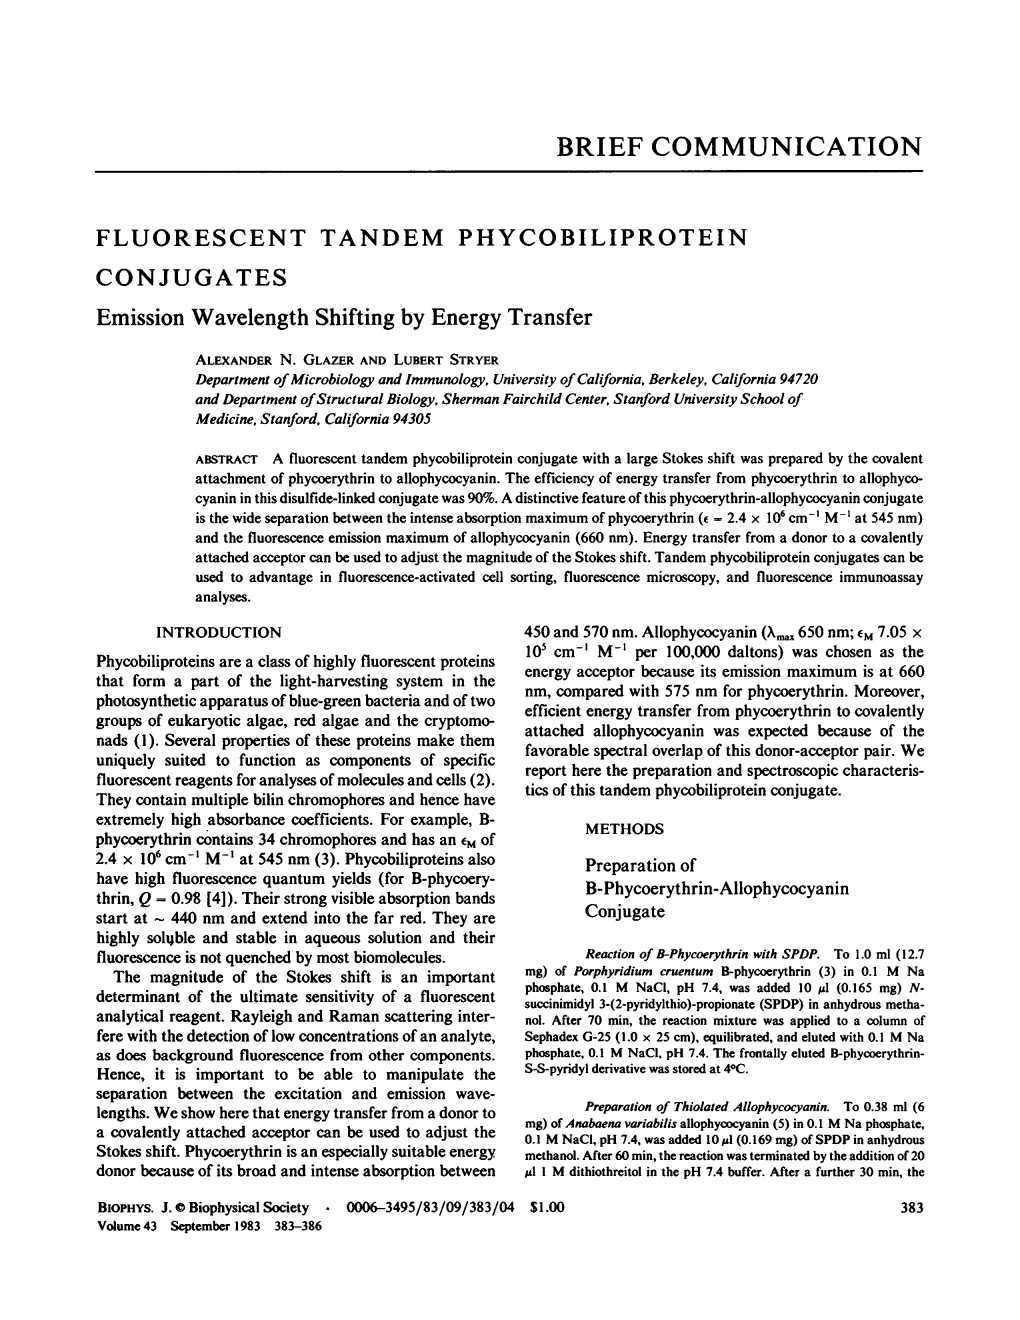 Fluorescent Tandem Phycobiliprotein Conjugates. Emission Wavelength